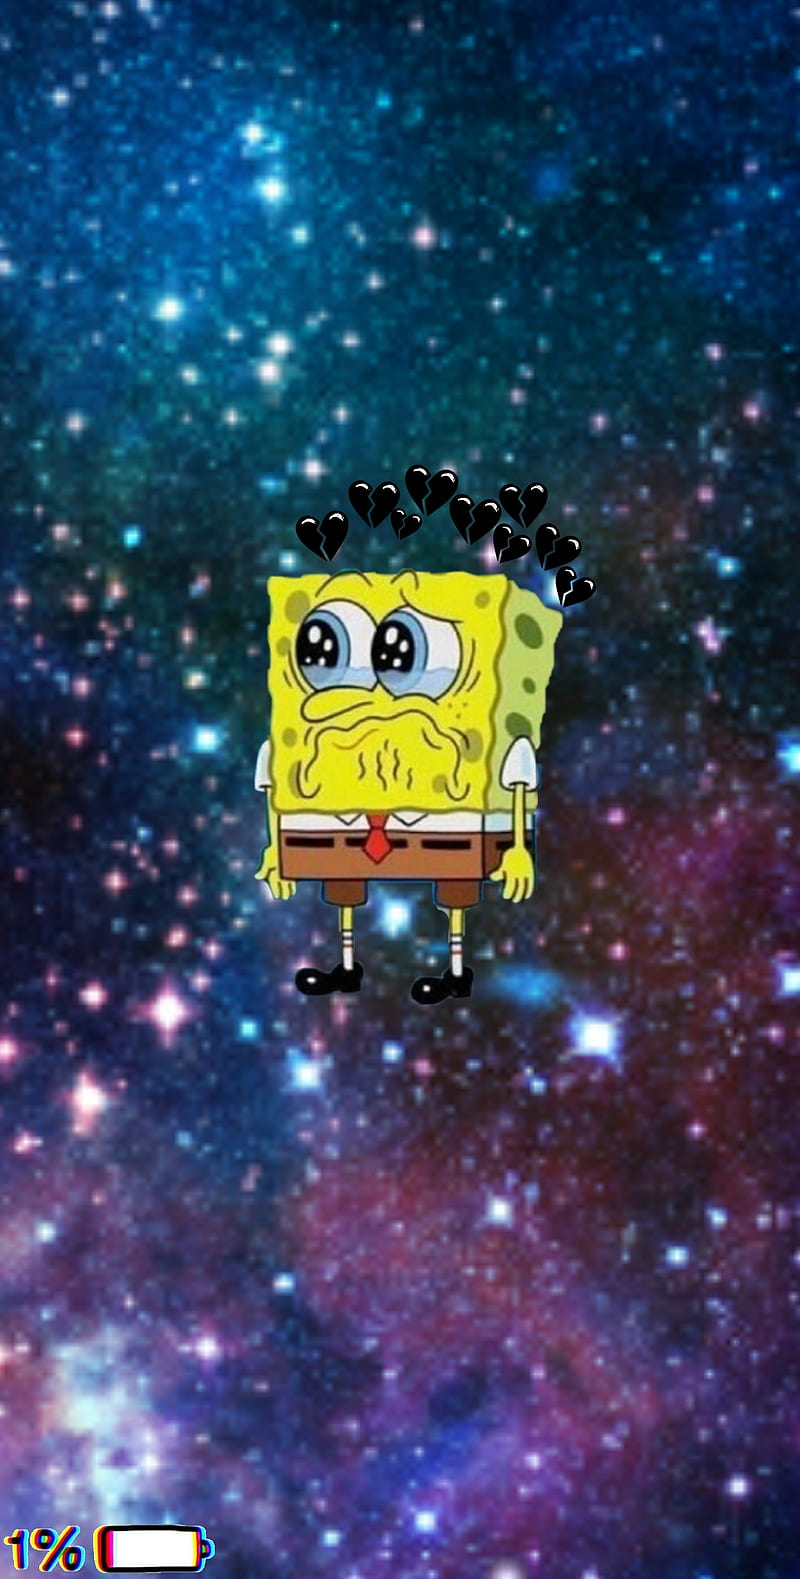 Sad Spongebob Squarepants Memes